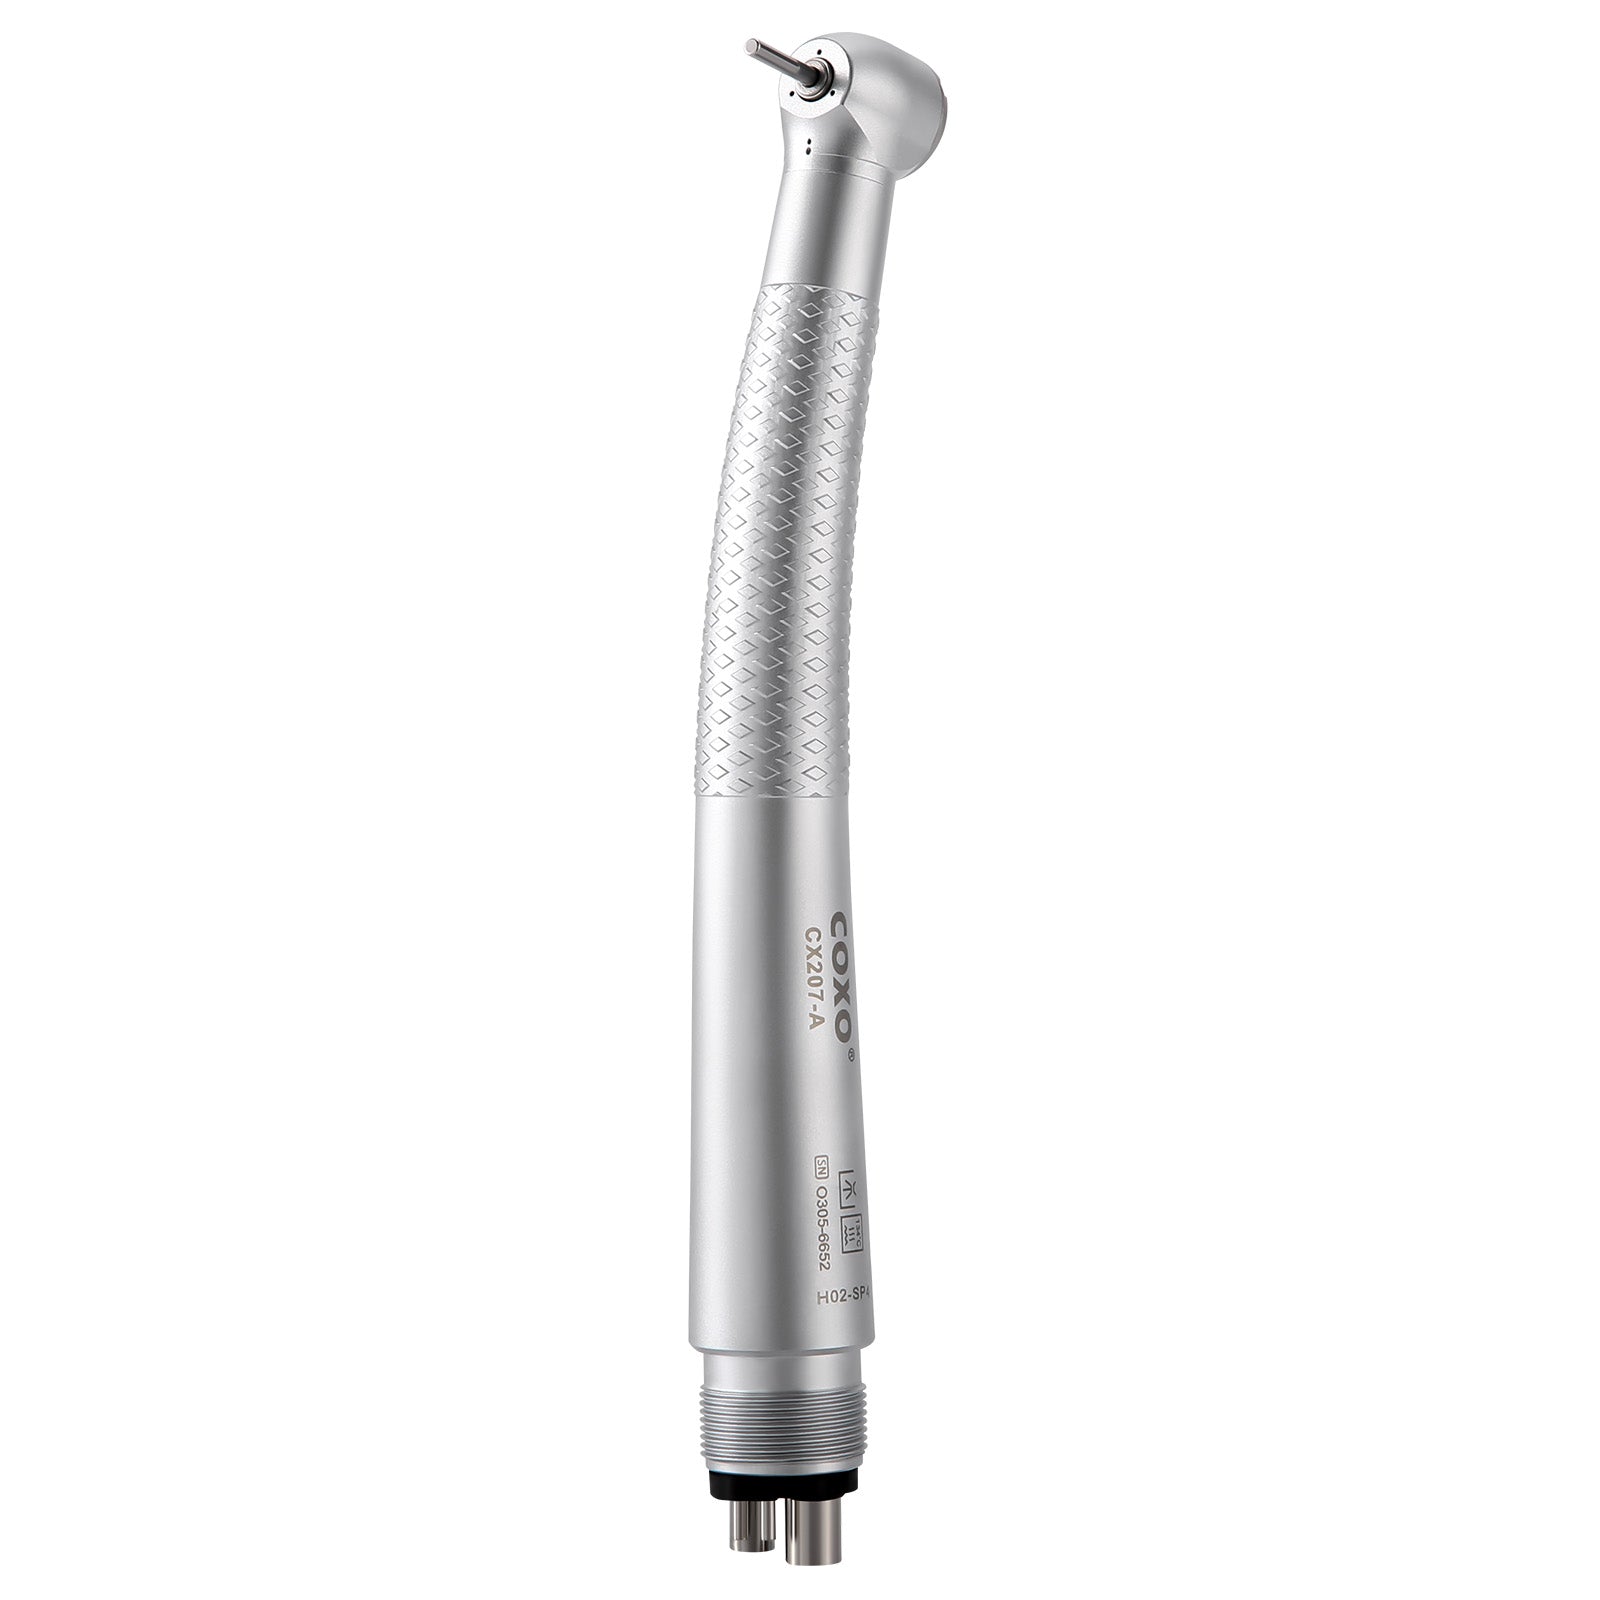 COXO Dental High Speed Handpiece Air Turbine Anti-retraction Standard Head 4 Hole Quick Coupling - azdentall.com